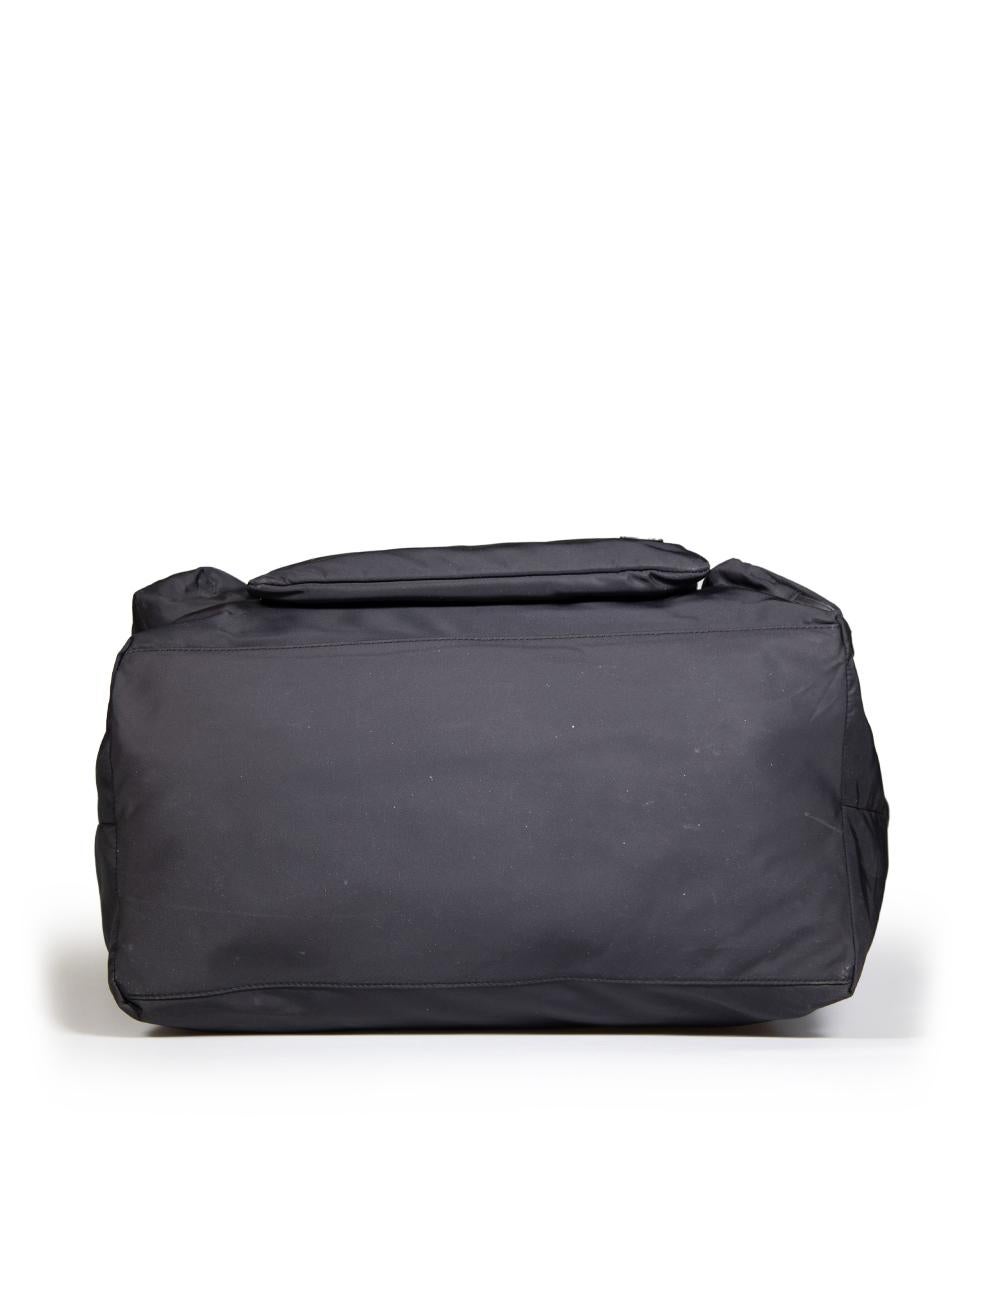 Women's Anya Hindmarch Black Large Multi-Pocket Tote Bag For Sale